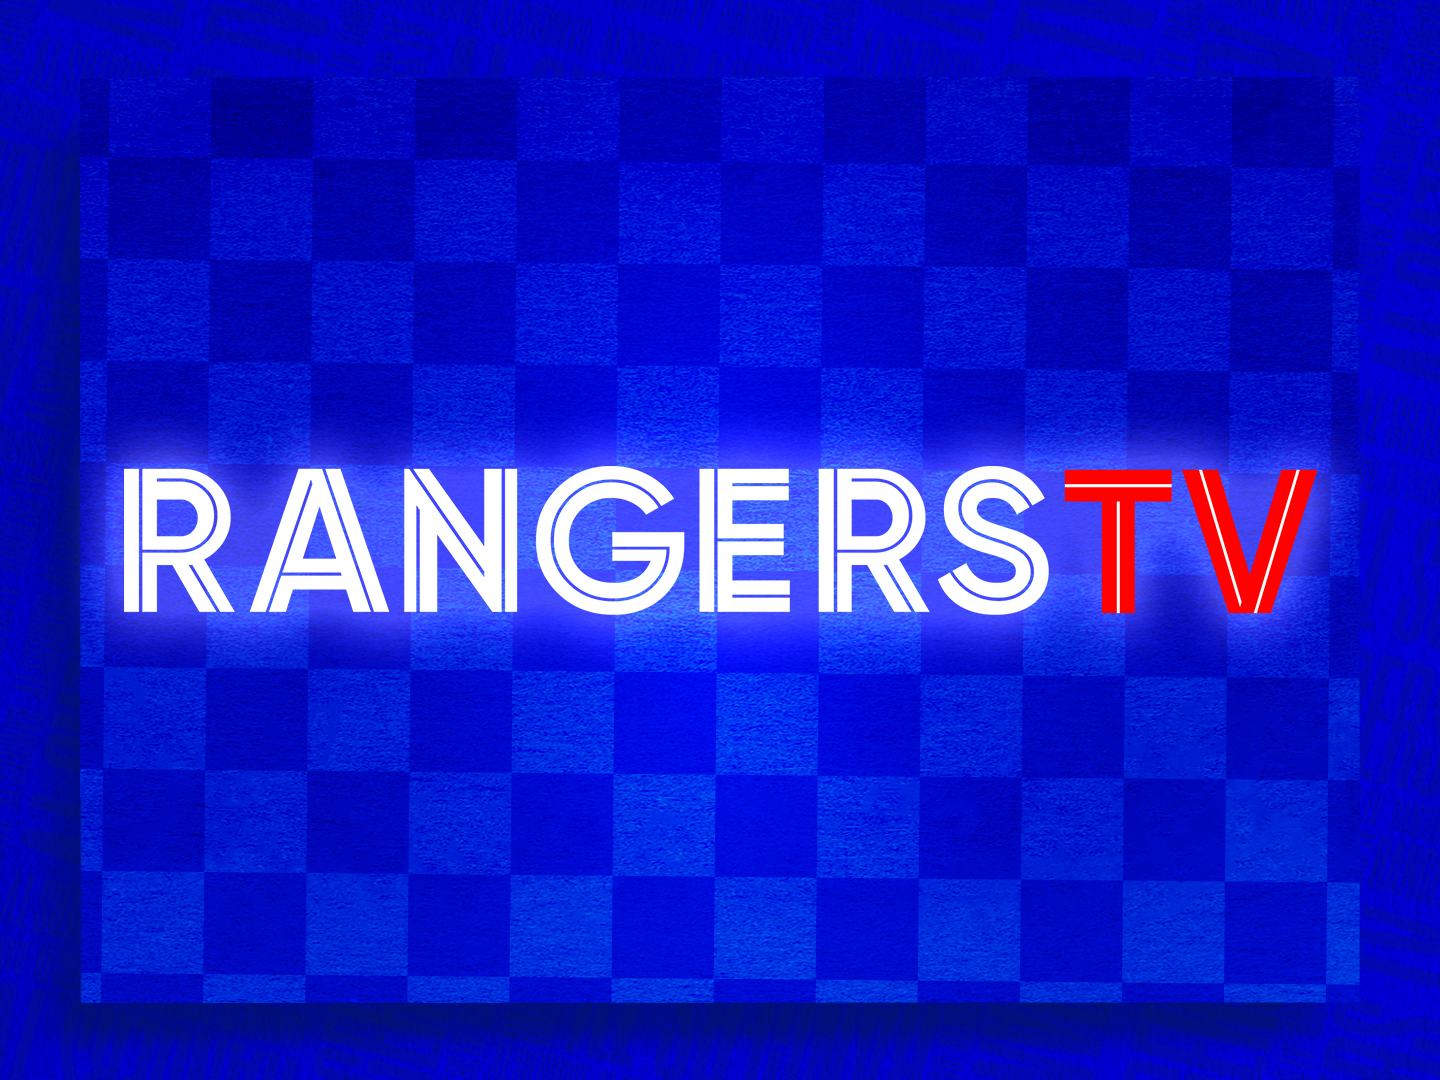 RangersTV Rangers Football Club